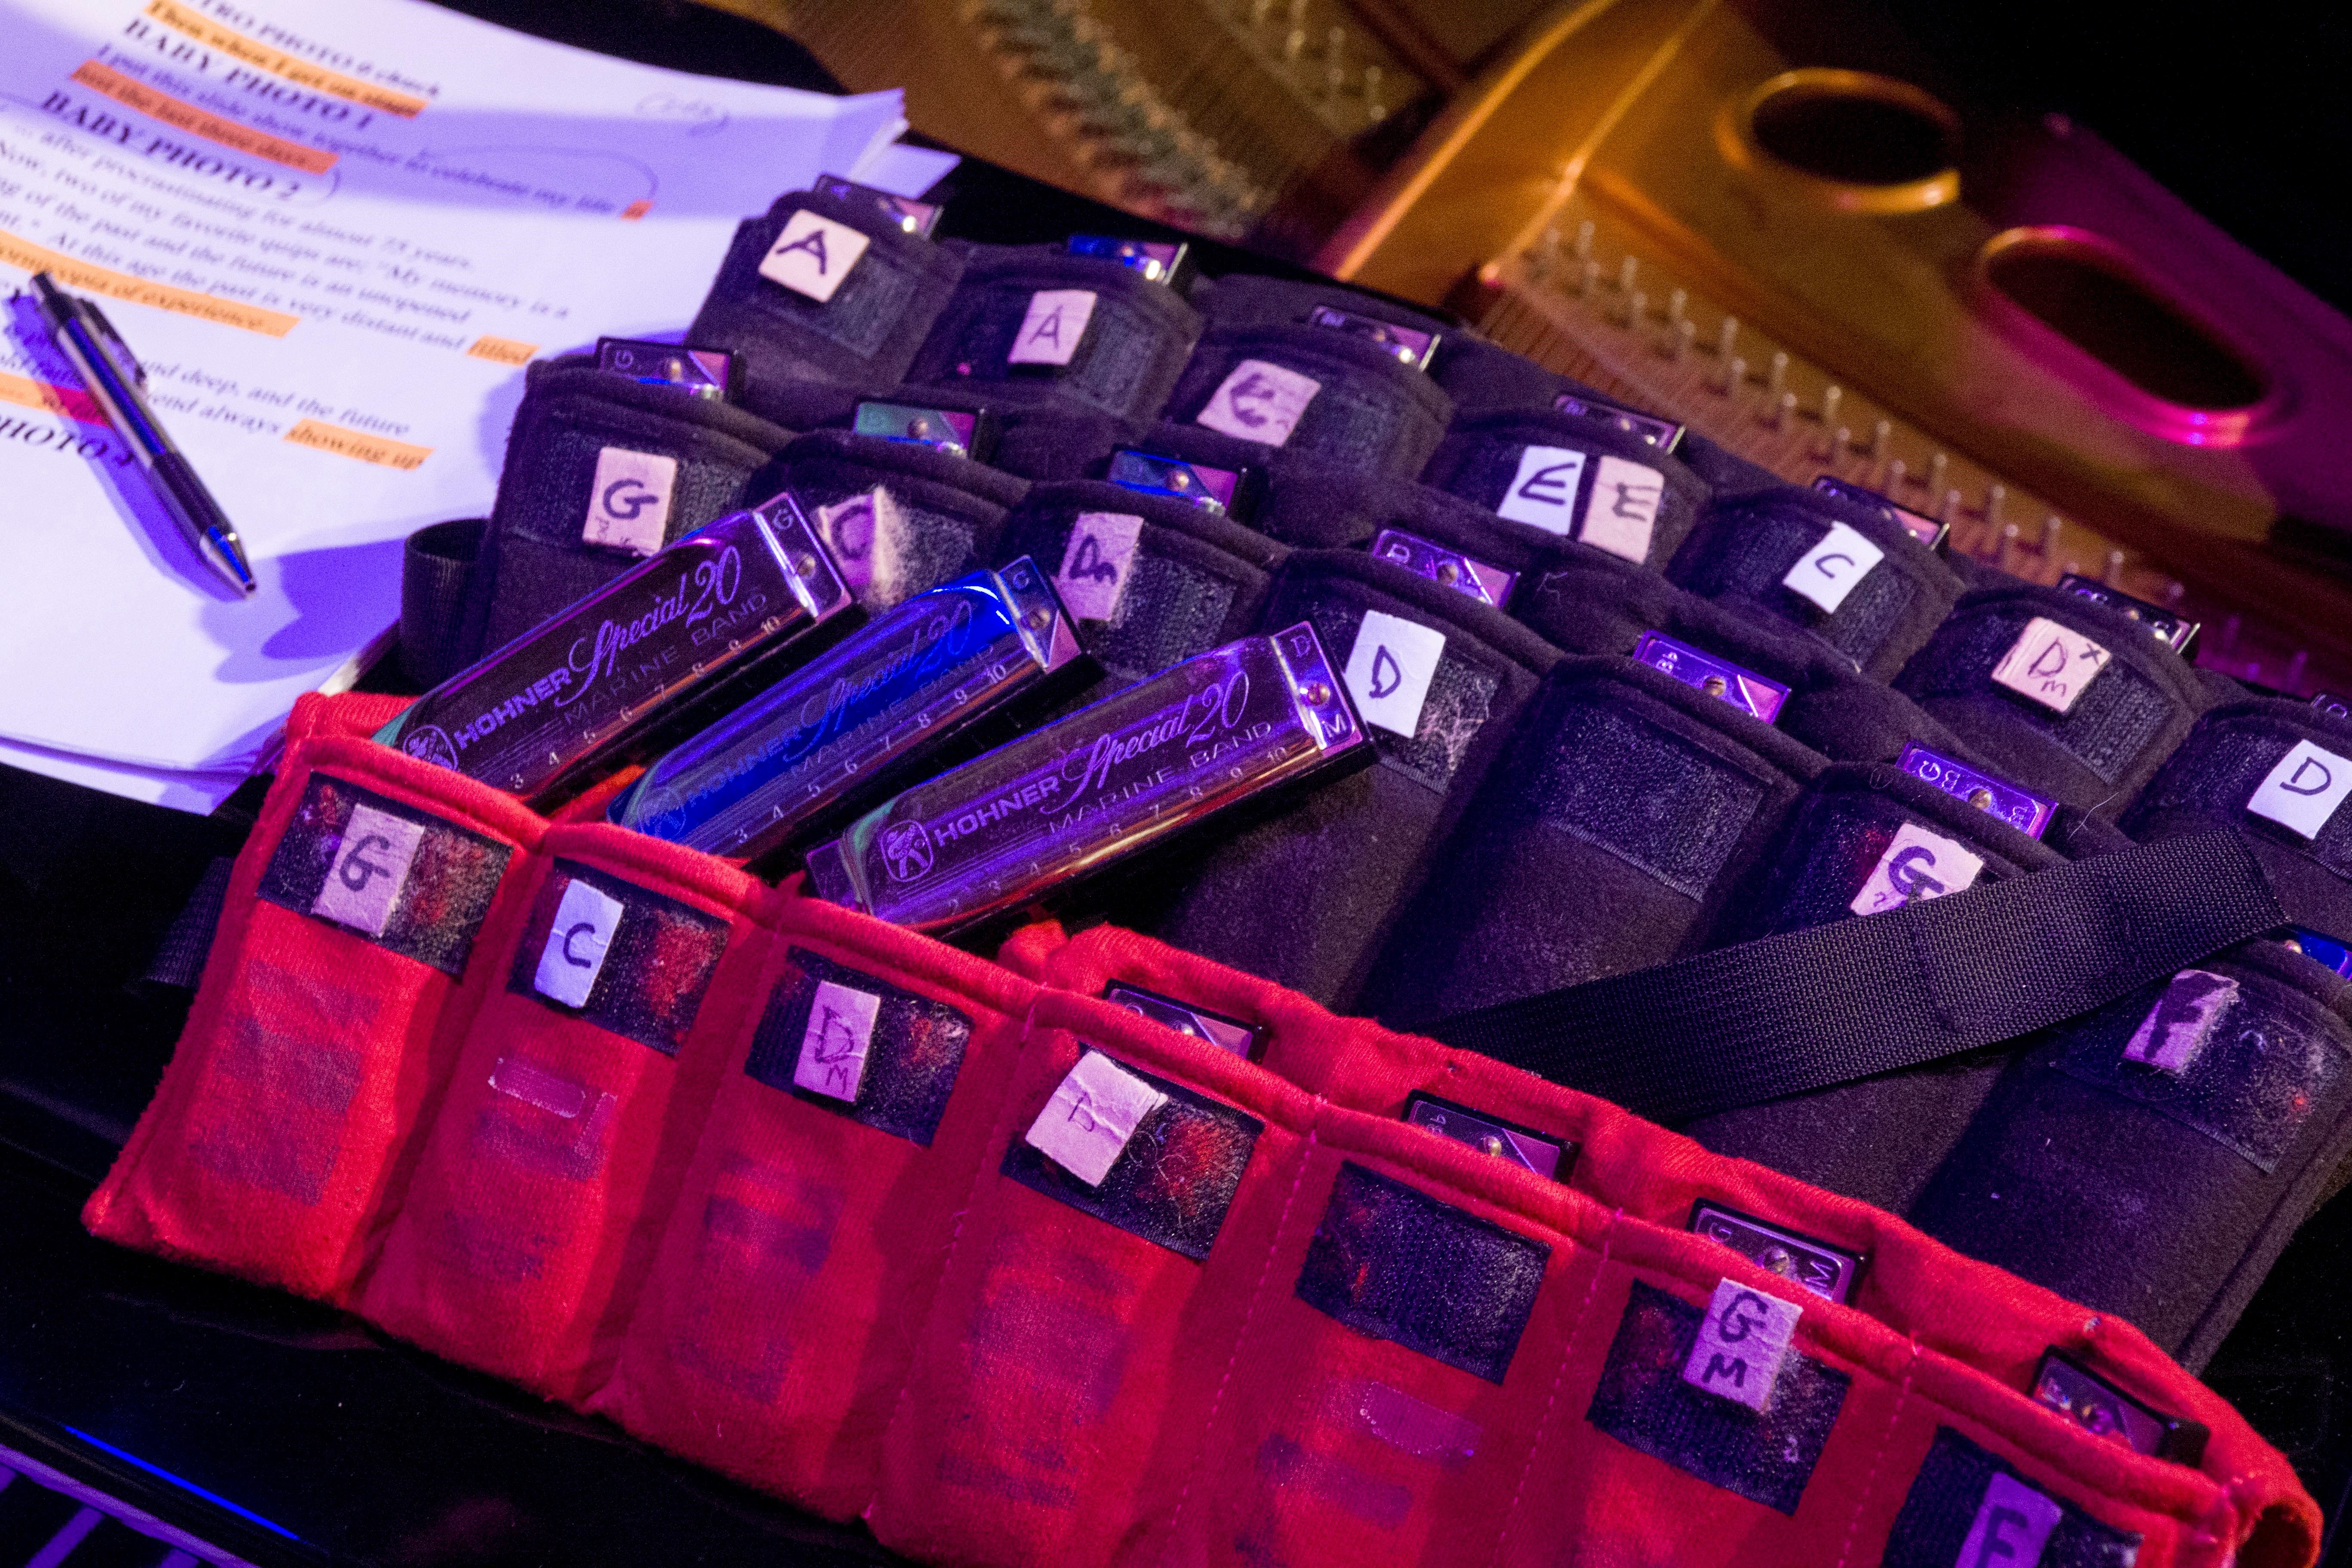 An array of harmonicas organized by key